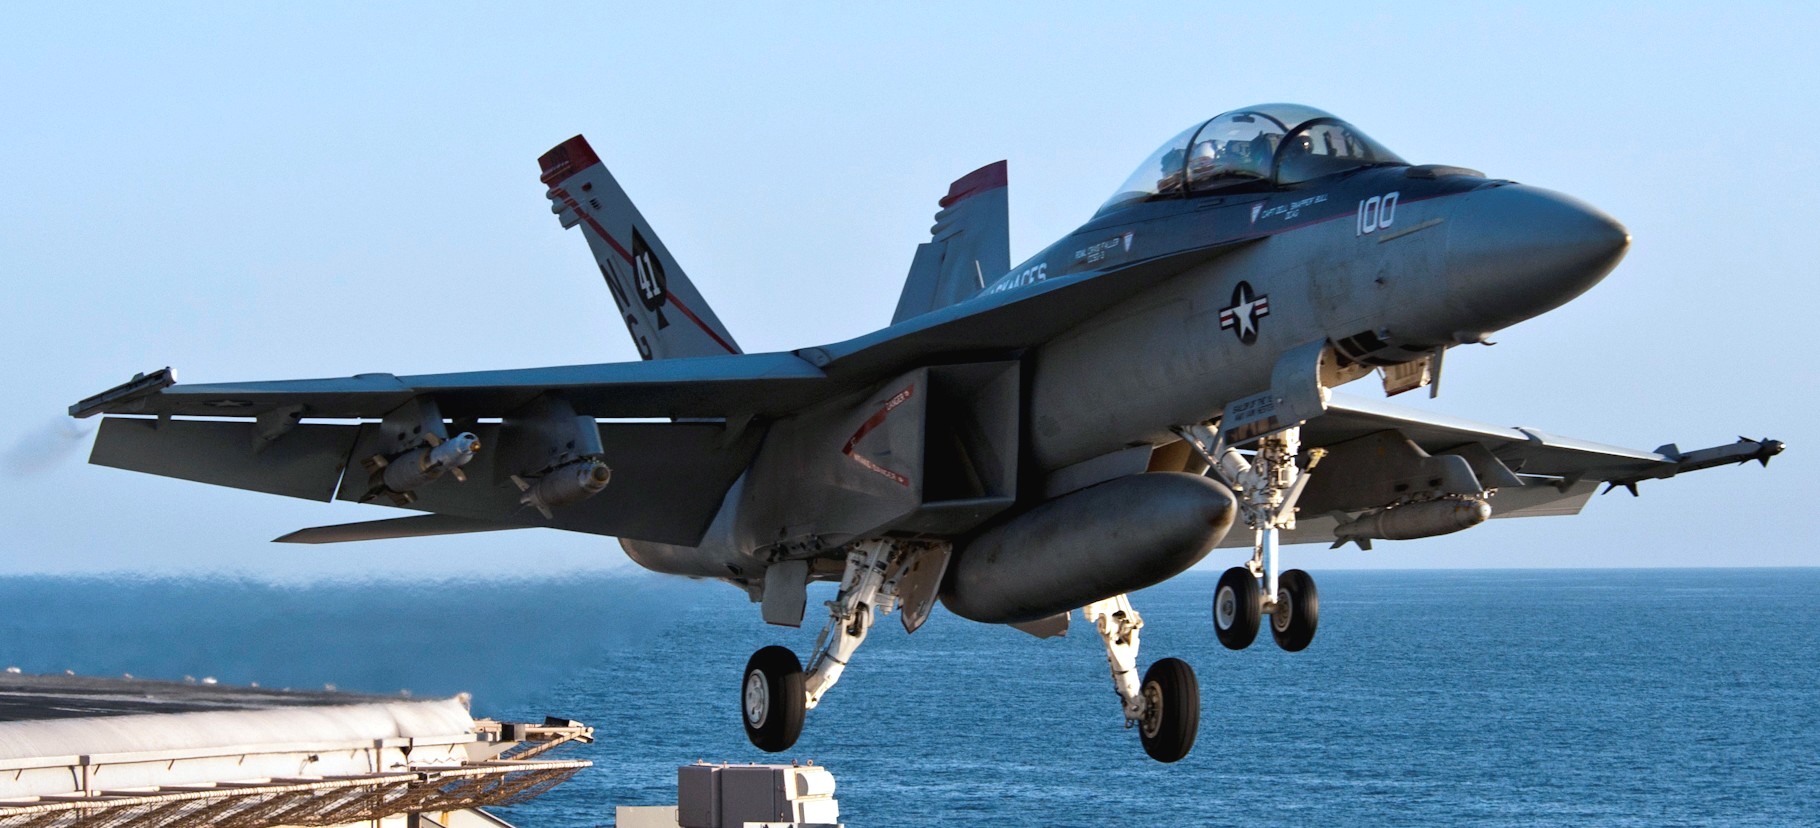 vfa-41 black aces strike fighter squadron f/a-18f super hornet cvw-9 cvn-70 uss john c. stennis us navy 99p